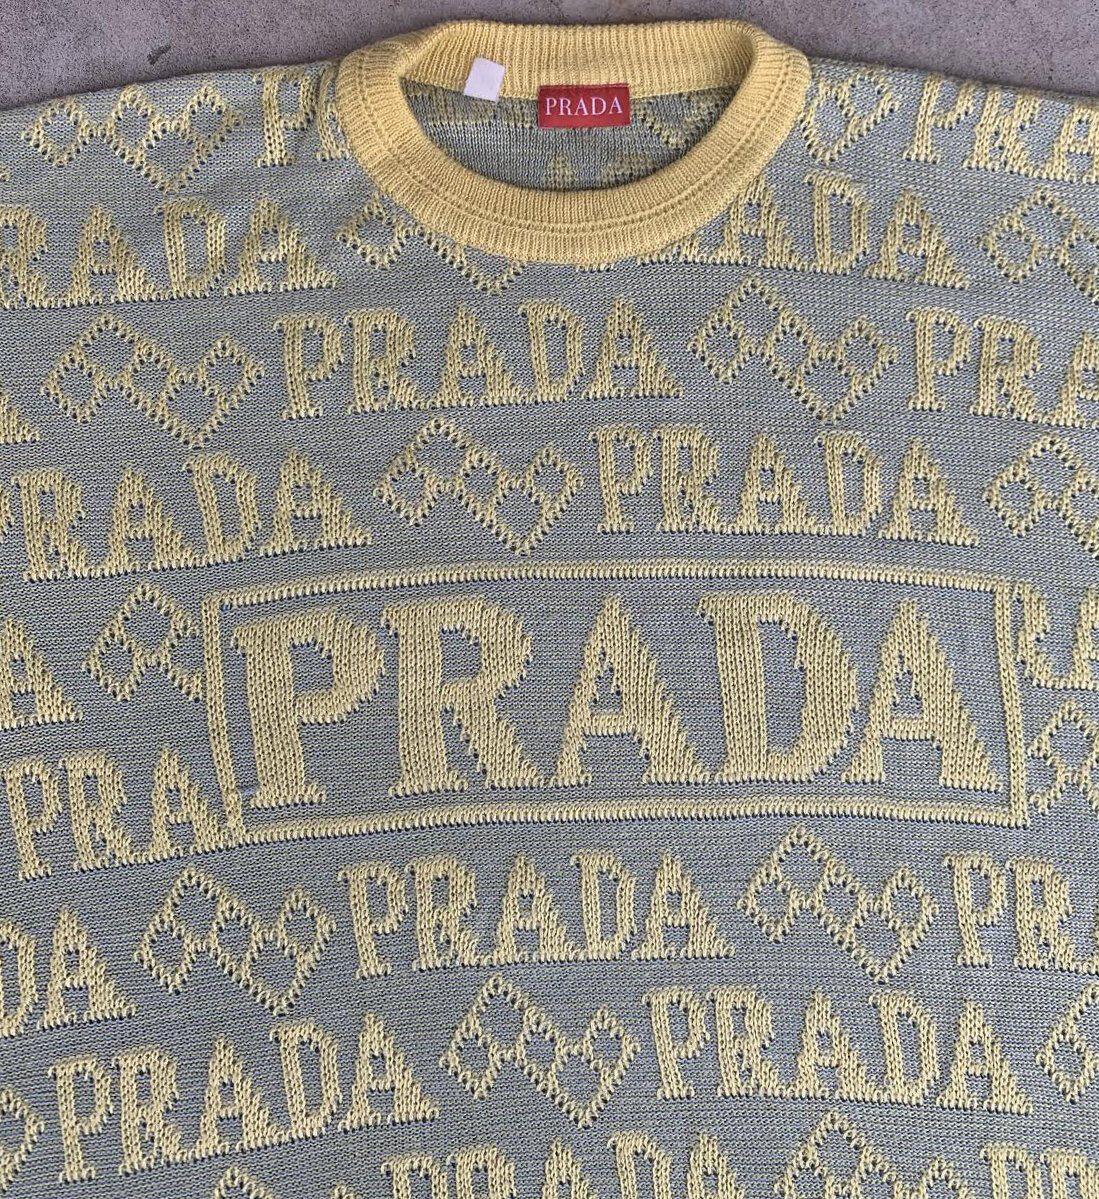 vintage prada sweater